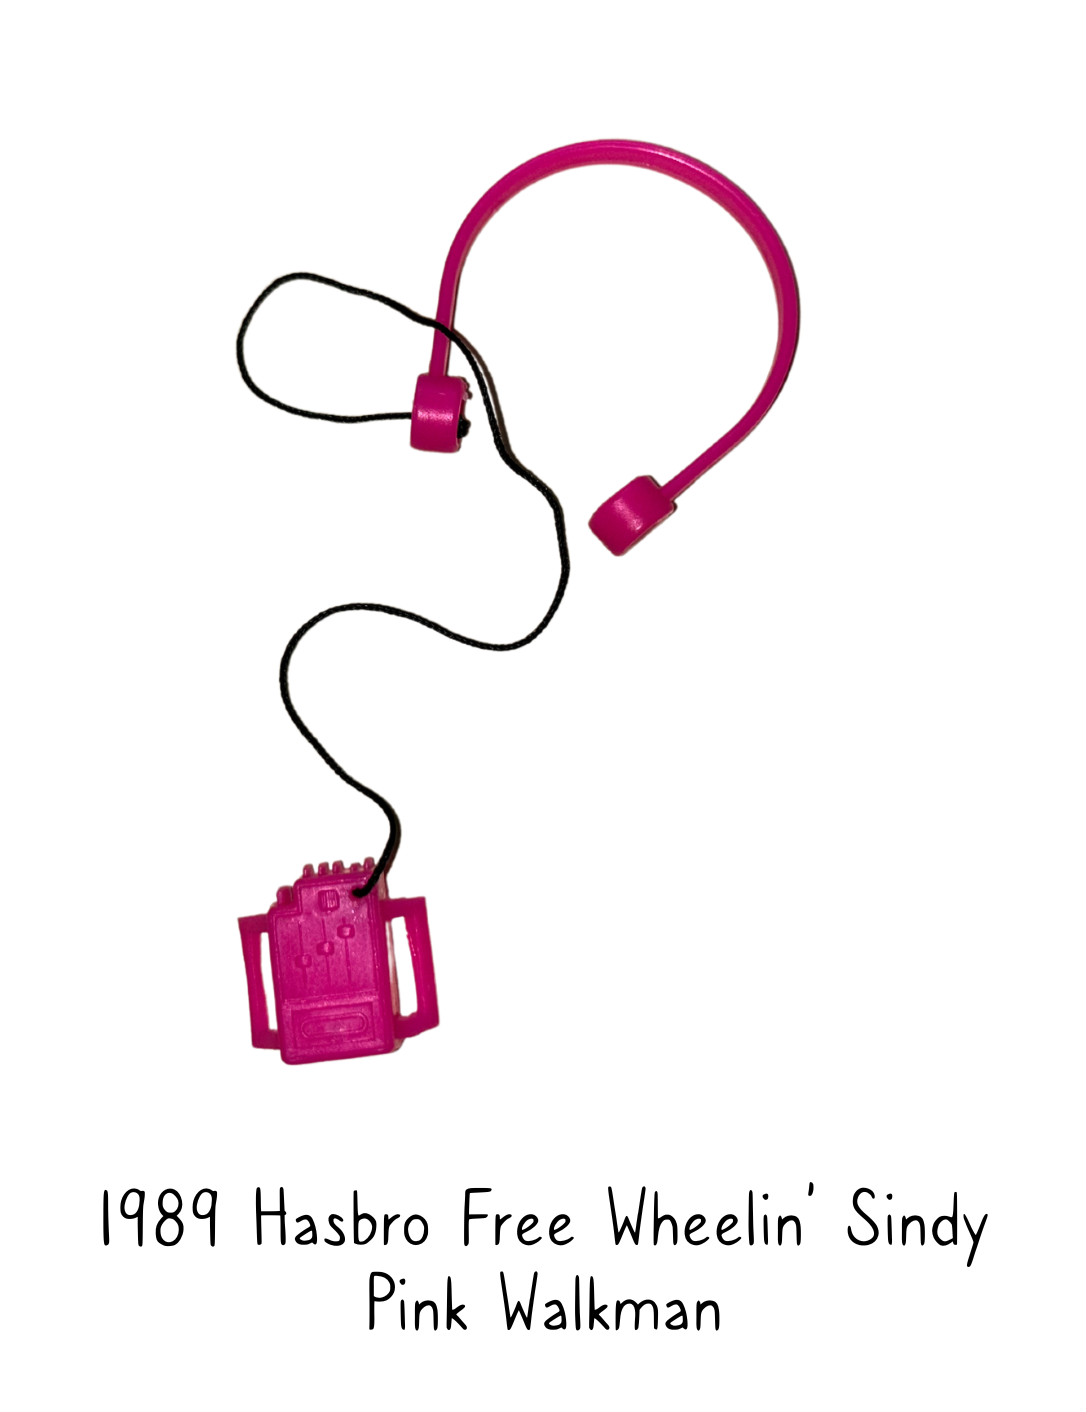 1989 Hasbro Free Wheelin' Sindy Pink Walkman